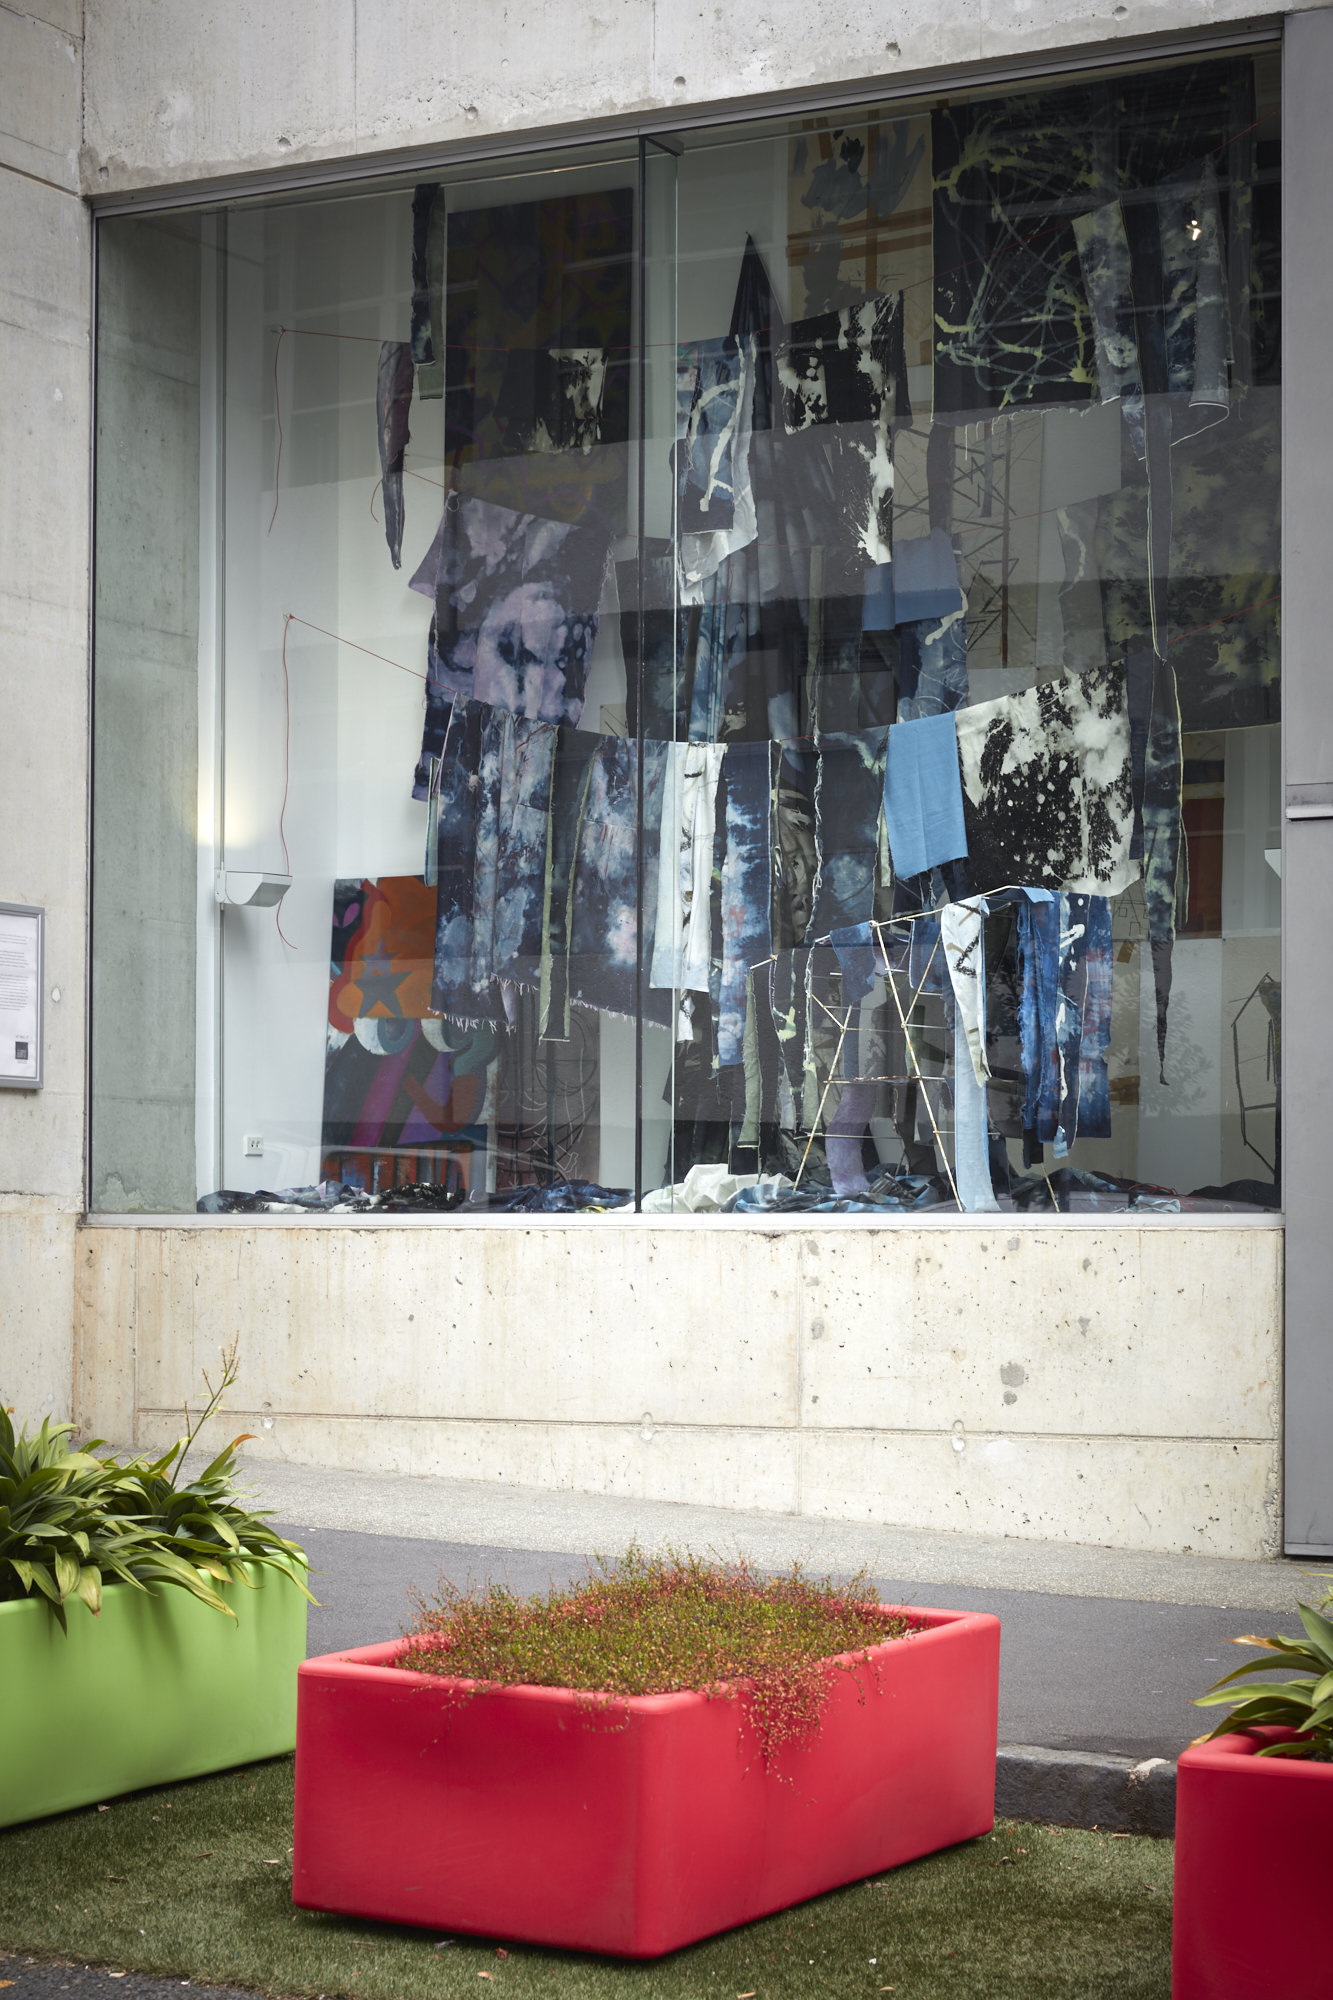 denim artwork, hanging in window. Photograph taken from street view